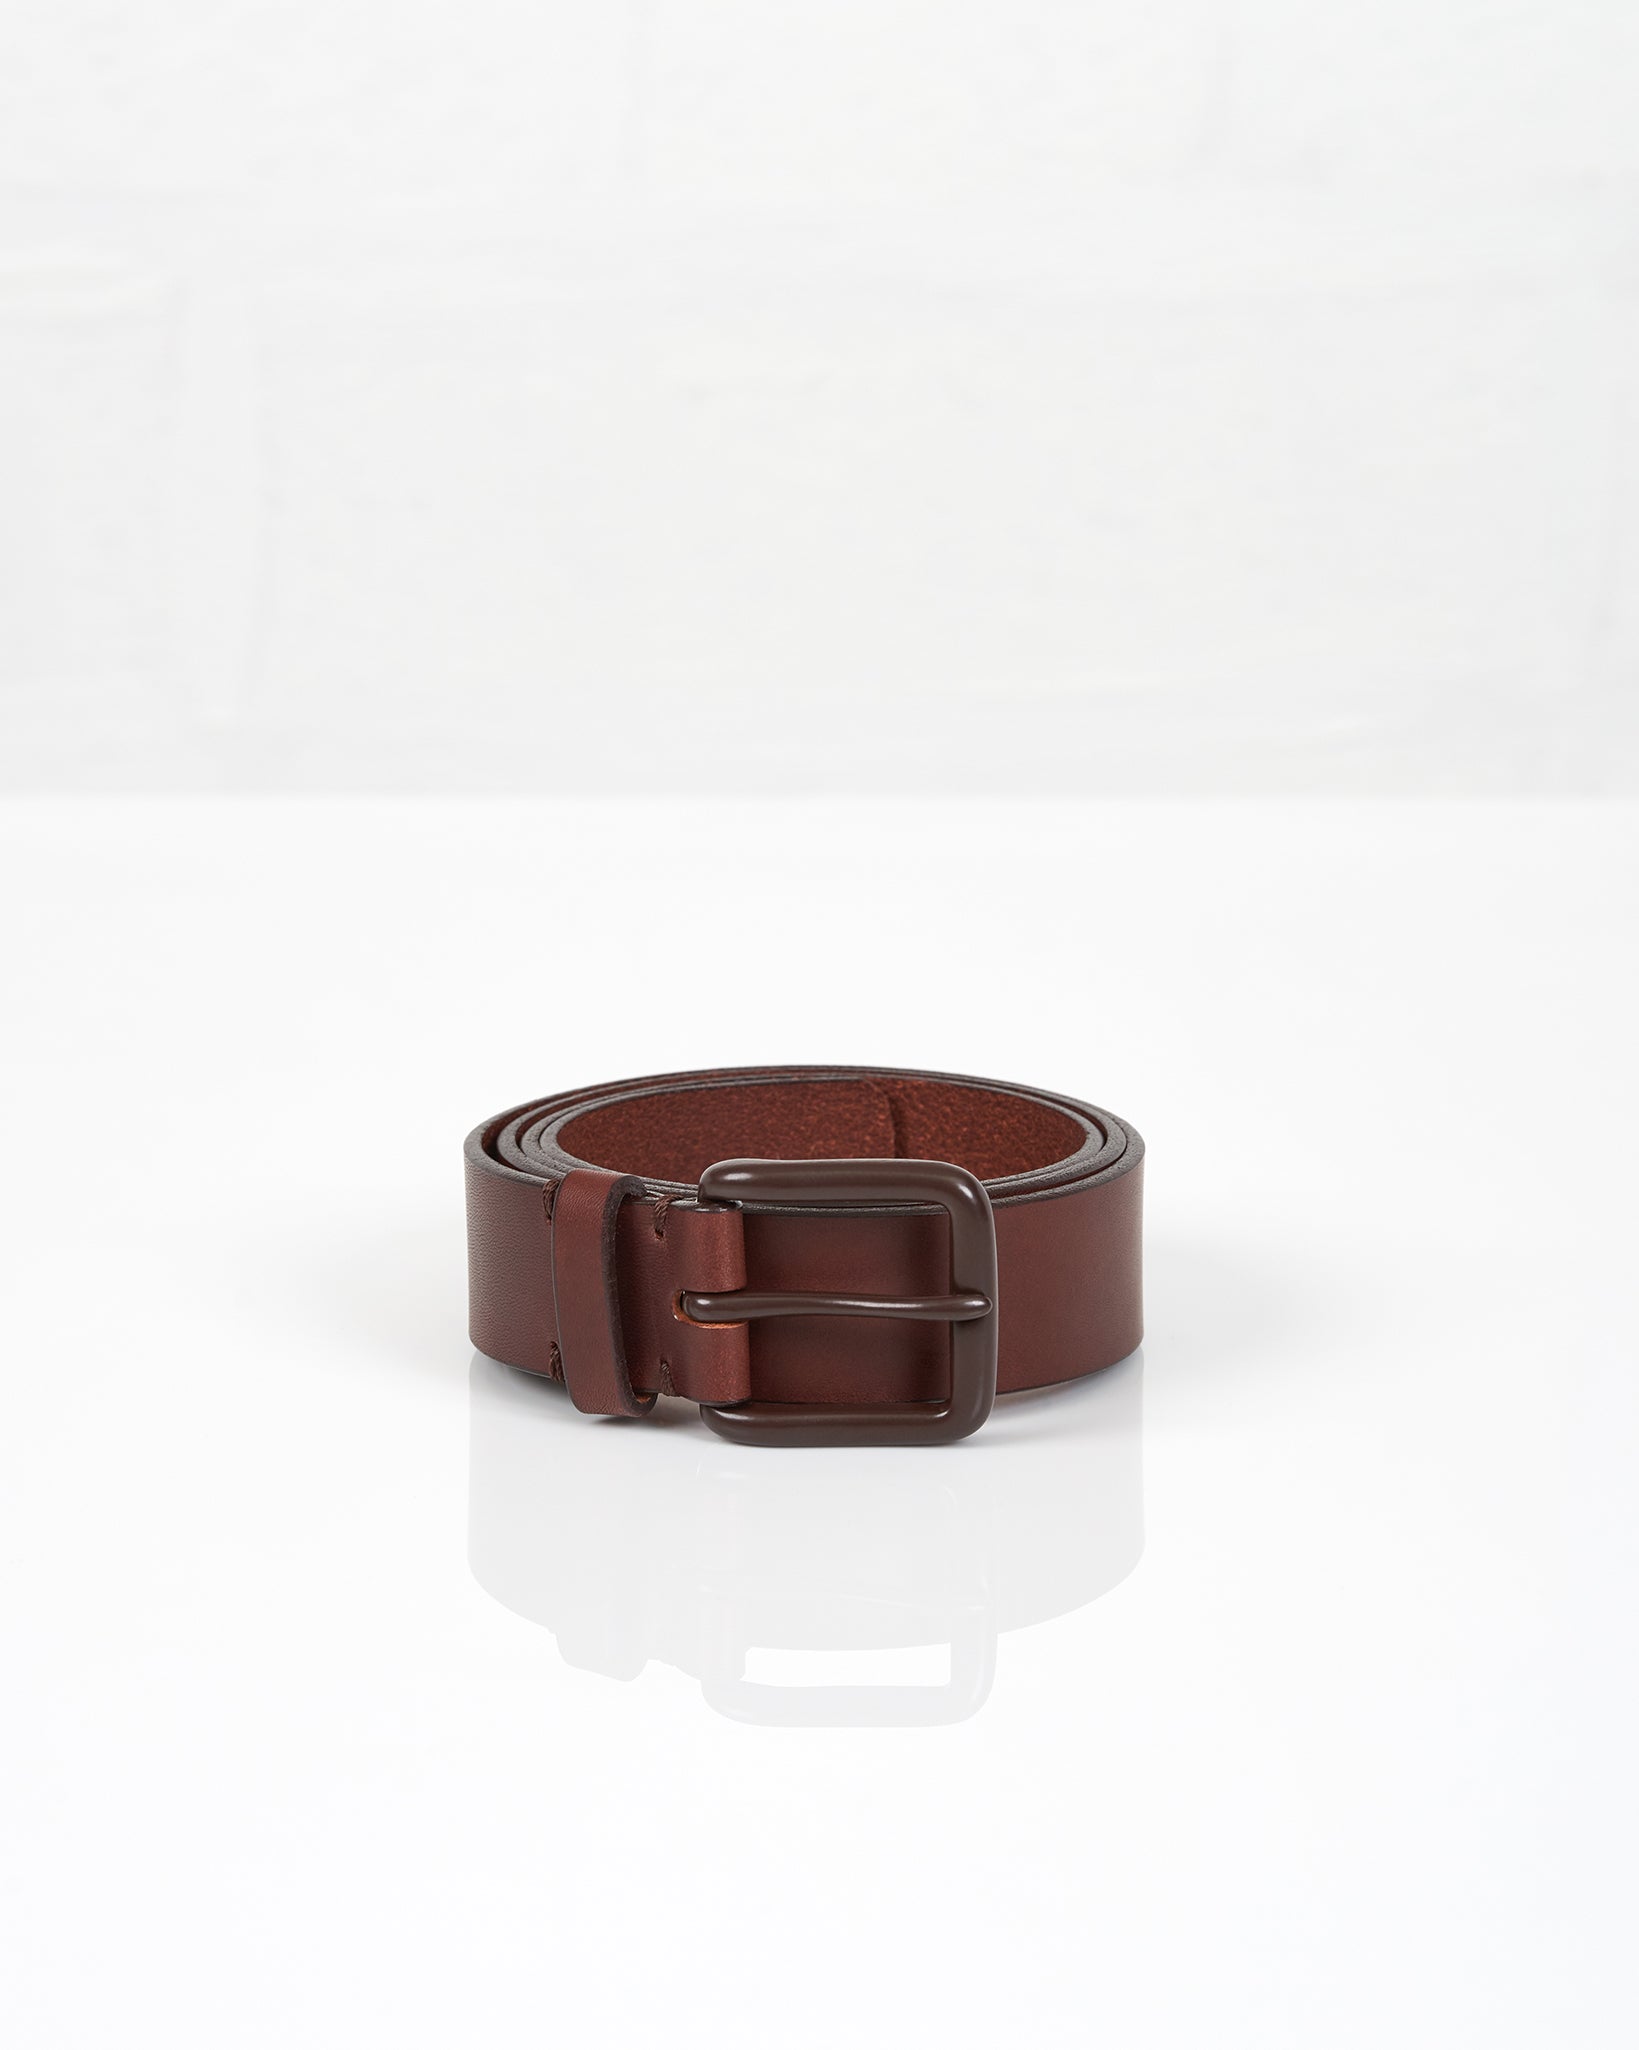 Modernist Belt - Russet Brown / Brown